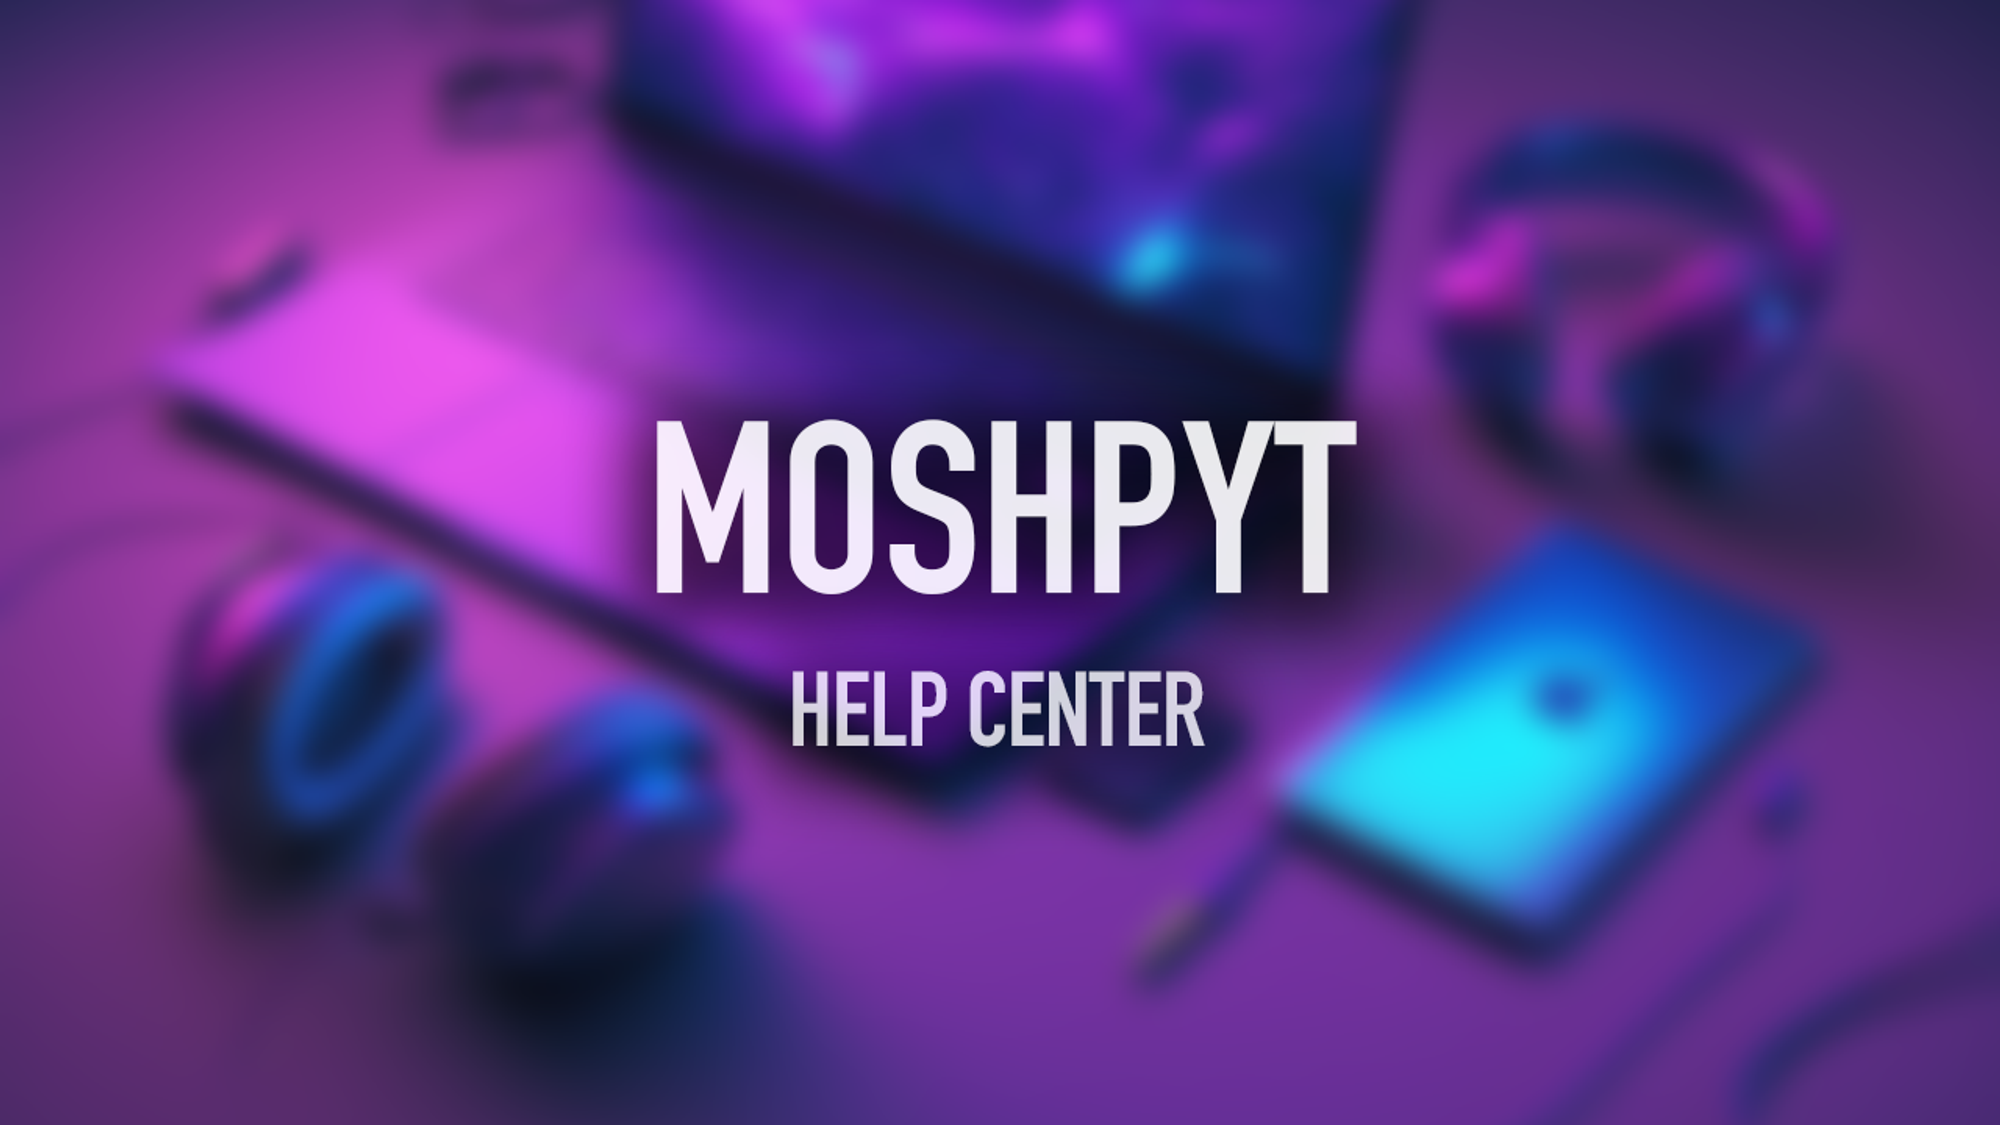 How do I Sign Up For Moshpyt?